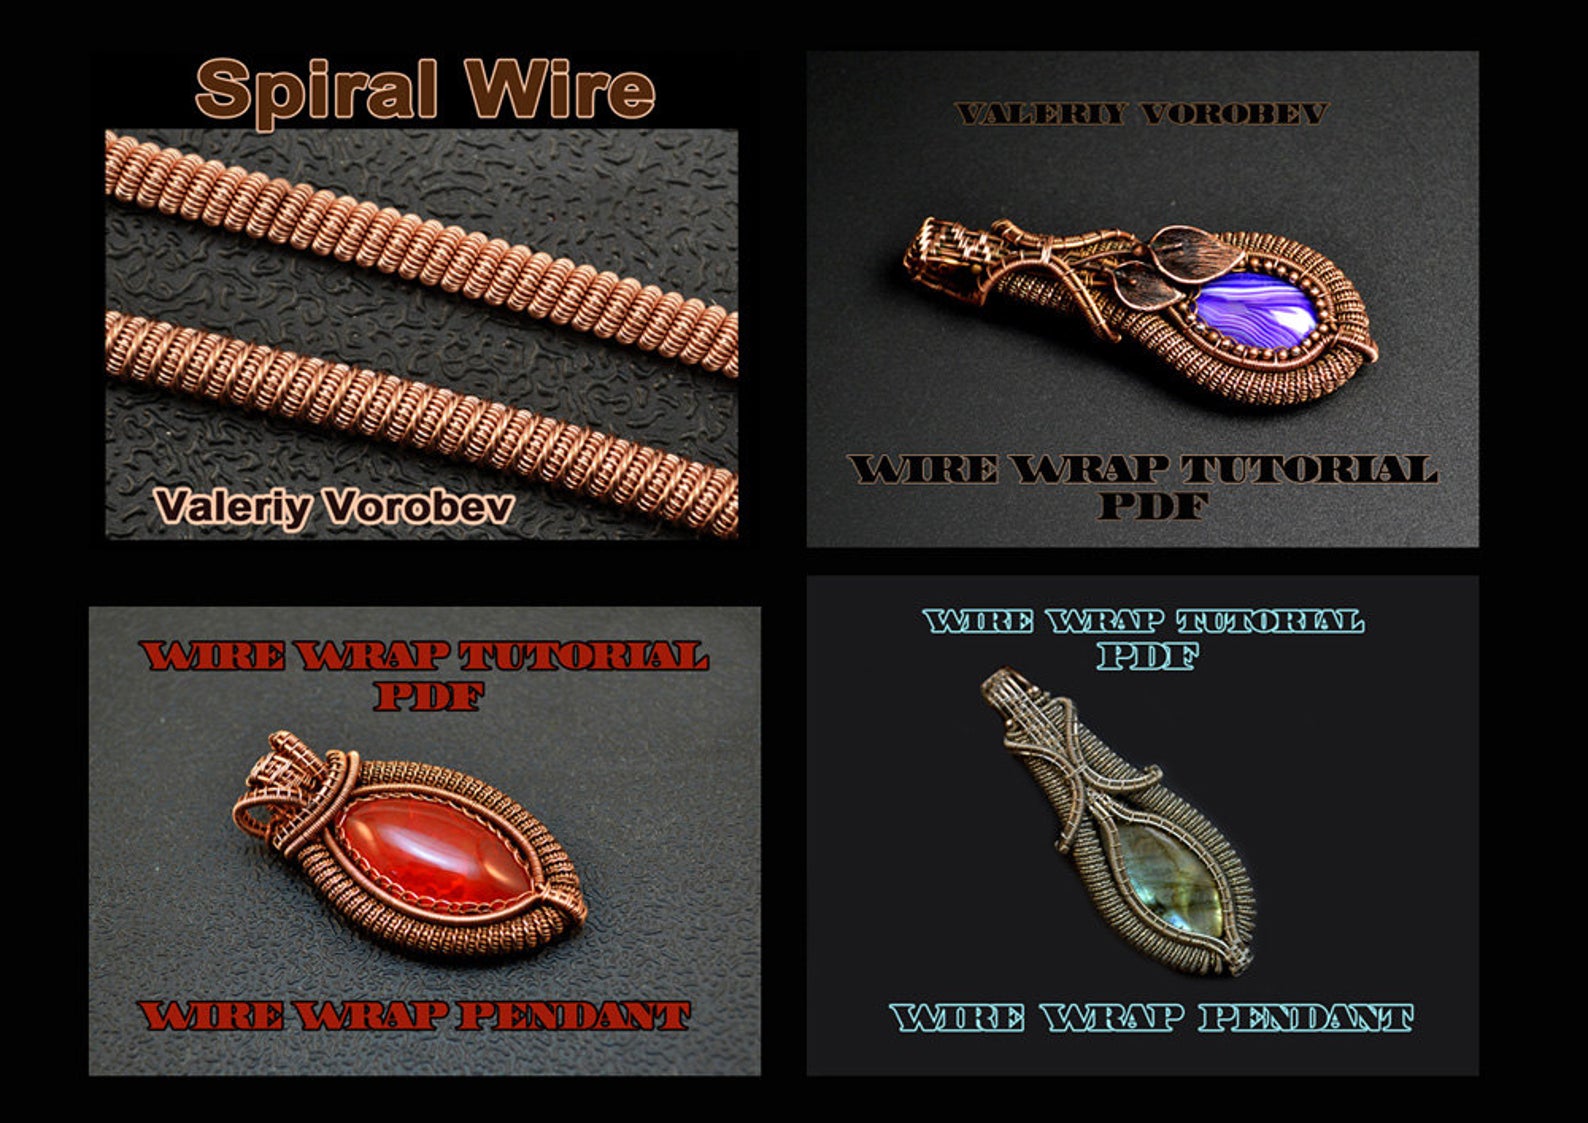 Exquisite Wire Wrapping Tutorials, PDF, Wire